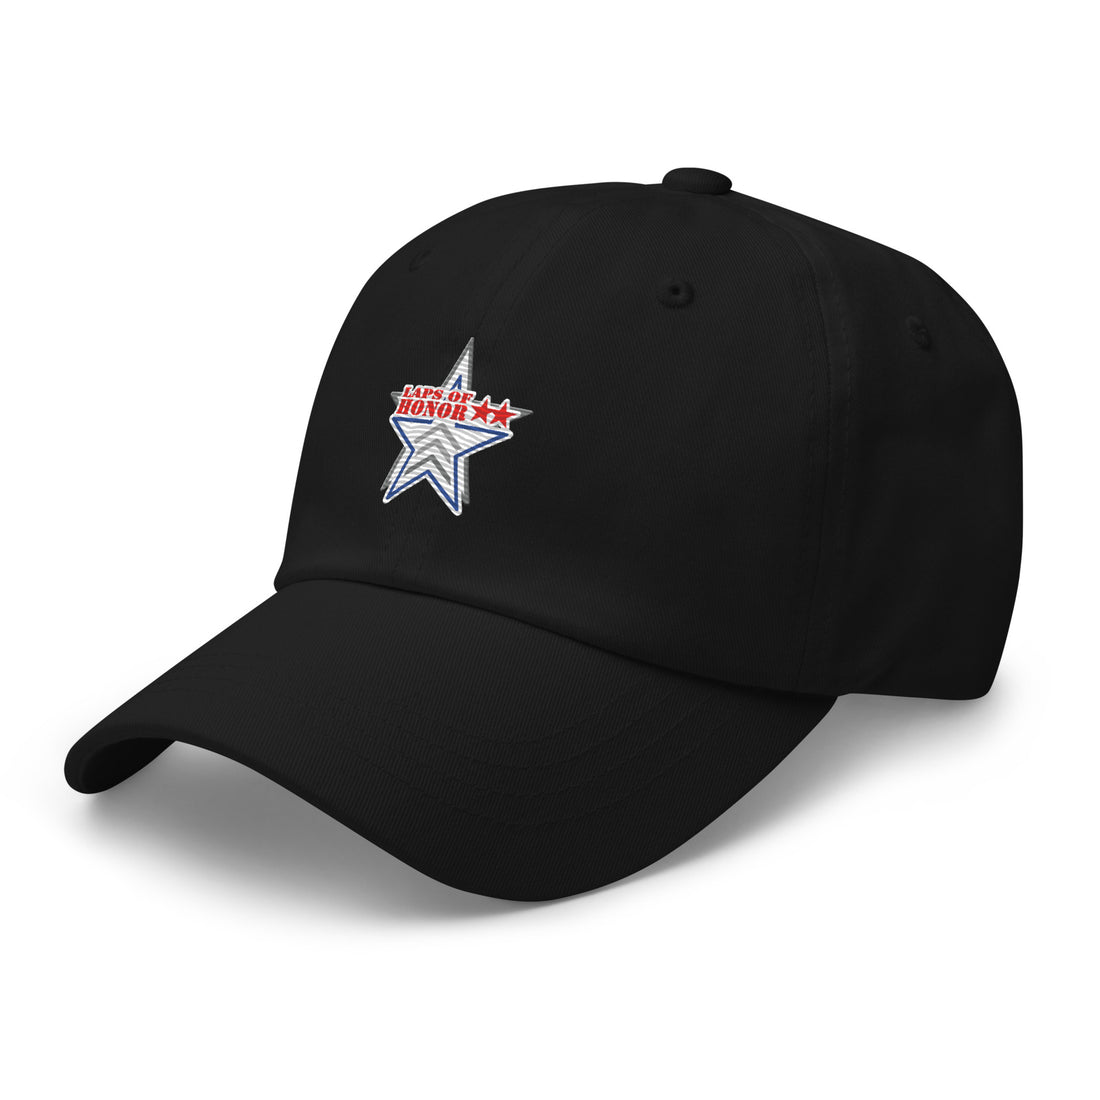 Laps of Honor Urban Explorer Hat